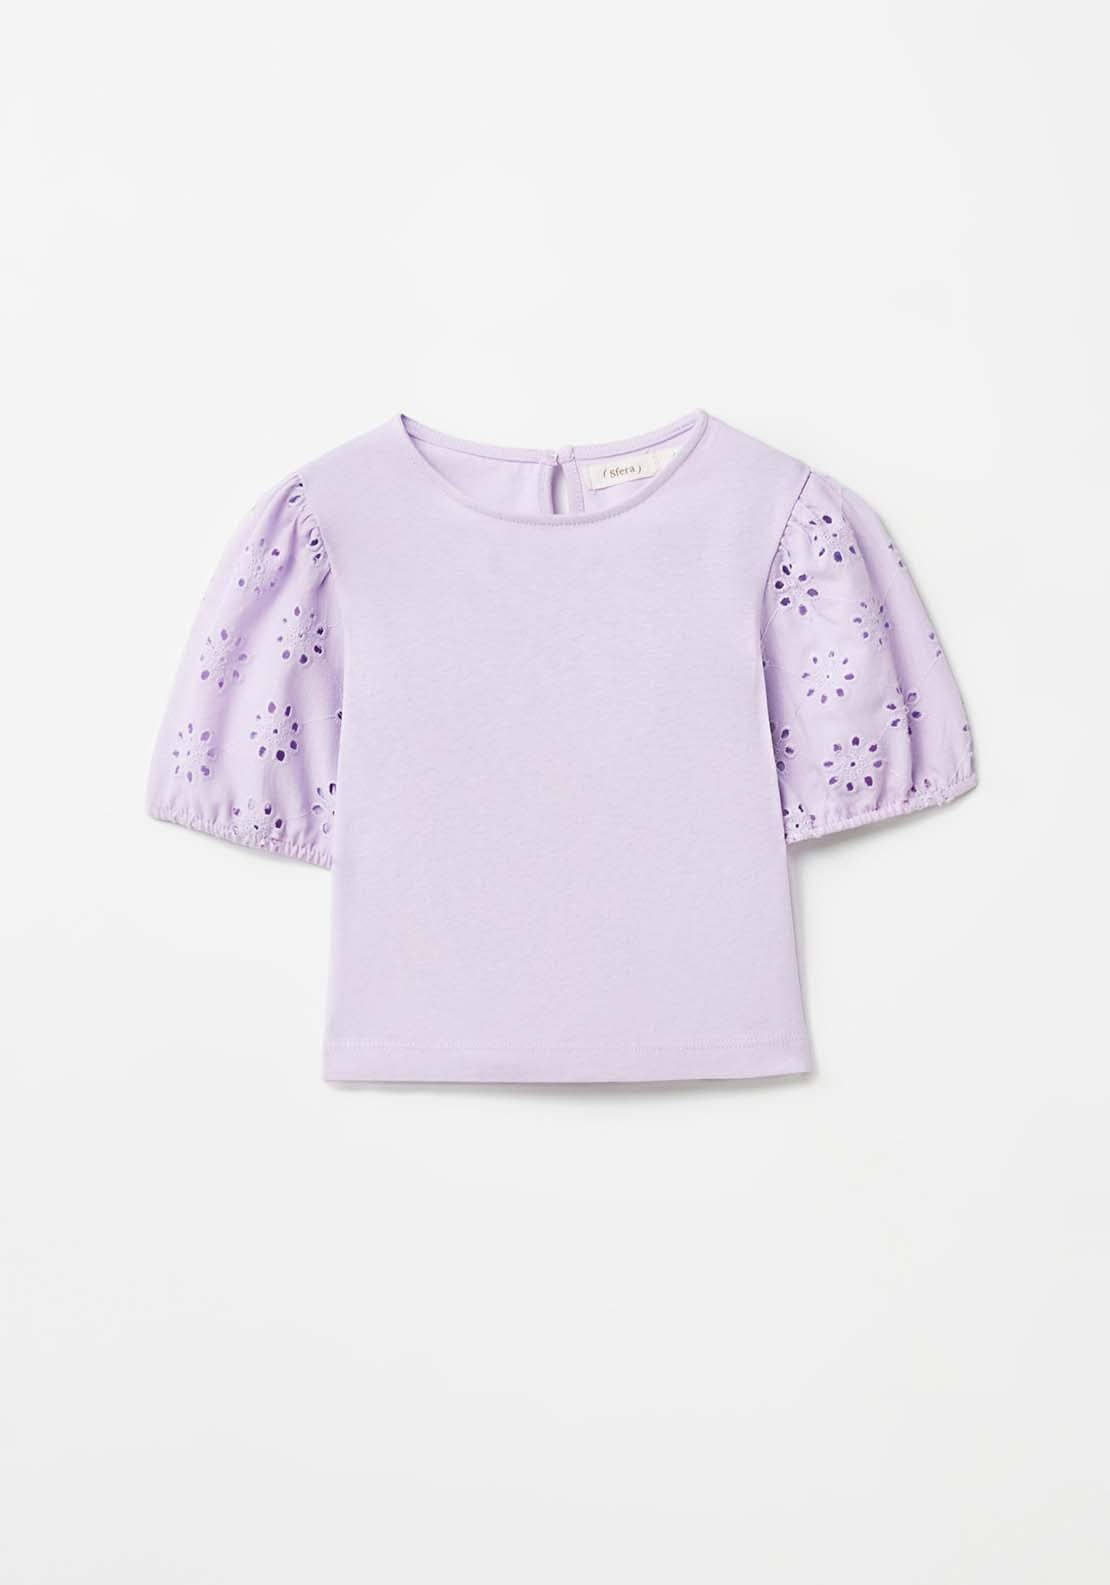 Sfera T-Shirt - Purple 1 Shaws Department Stores